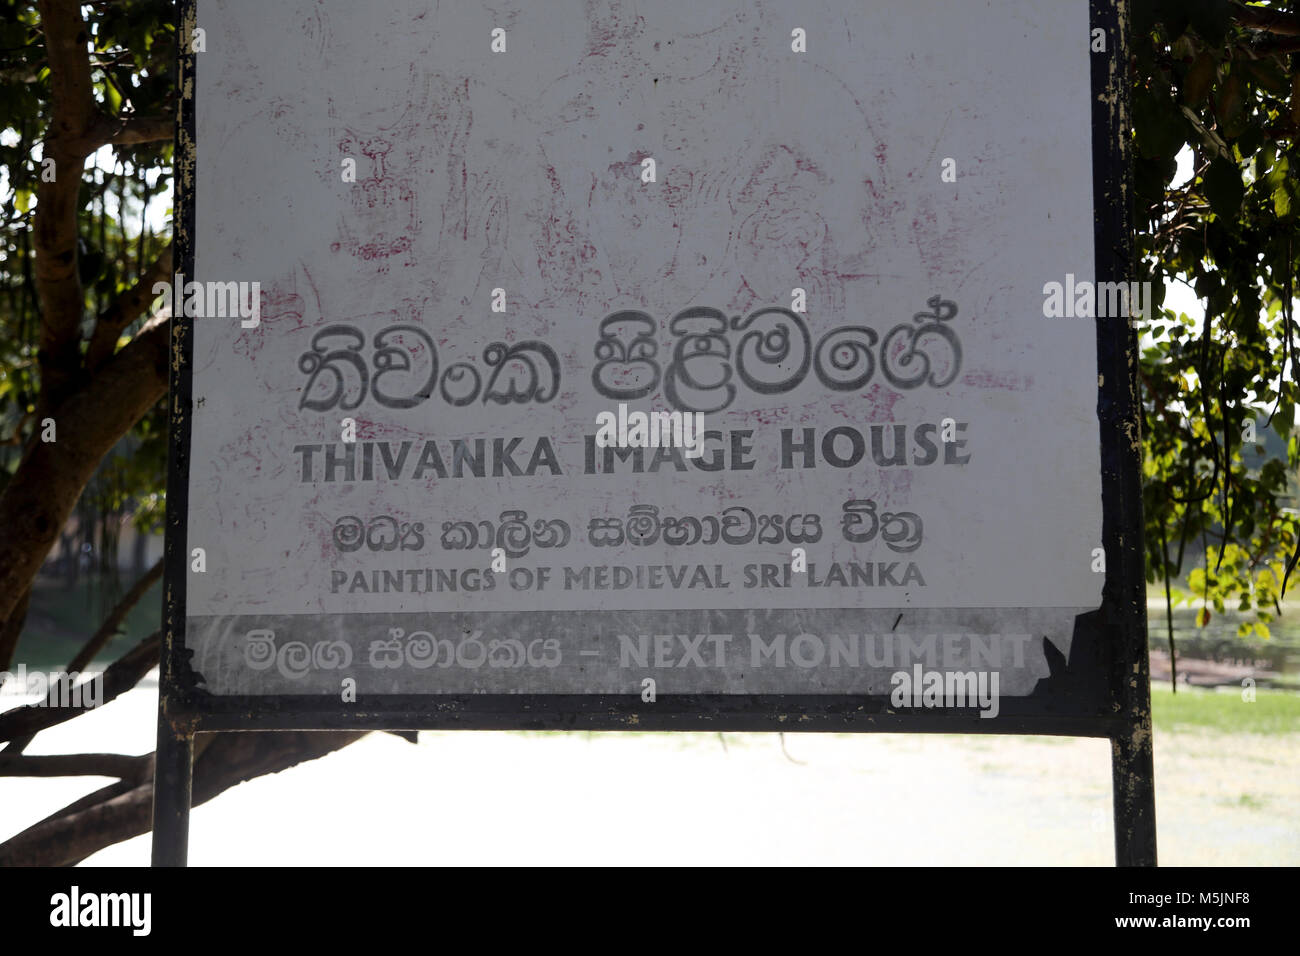 Polonnaruwa North Central Province Sri Lanka Gal Vihara Thivanka Image House Bilingual Sign Stock Photo